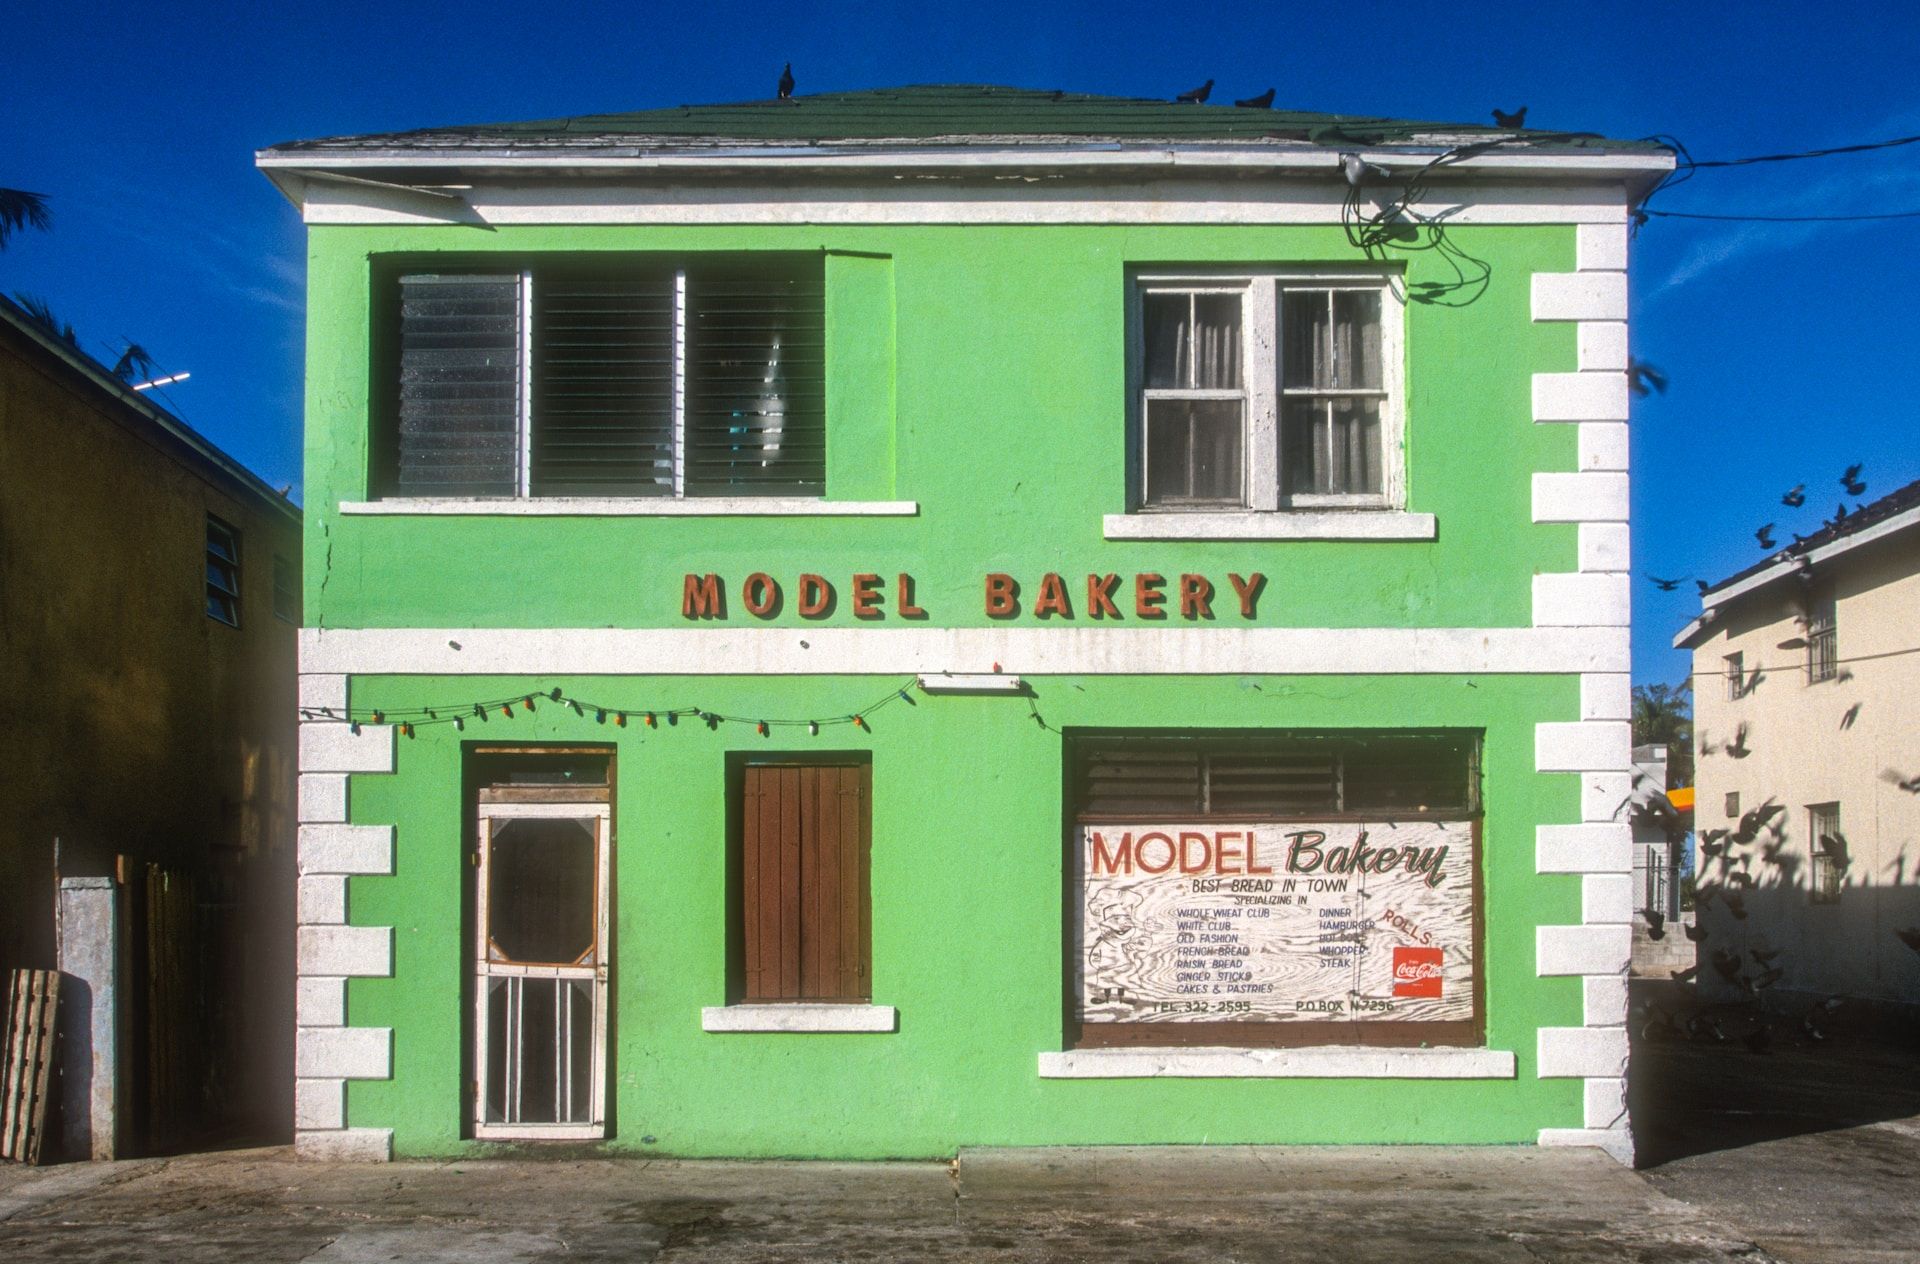 Bright green bakery storefront in Nassau, Bahamas